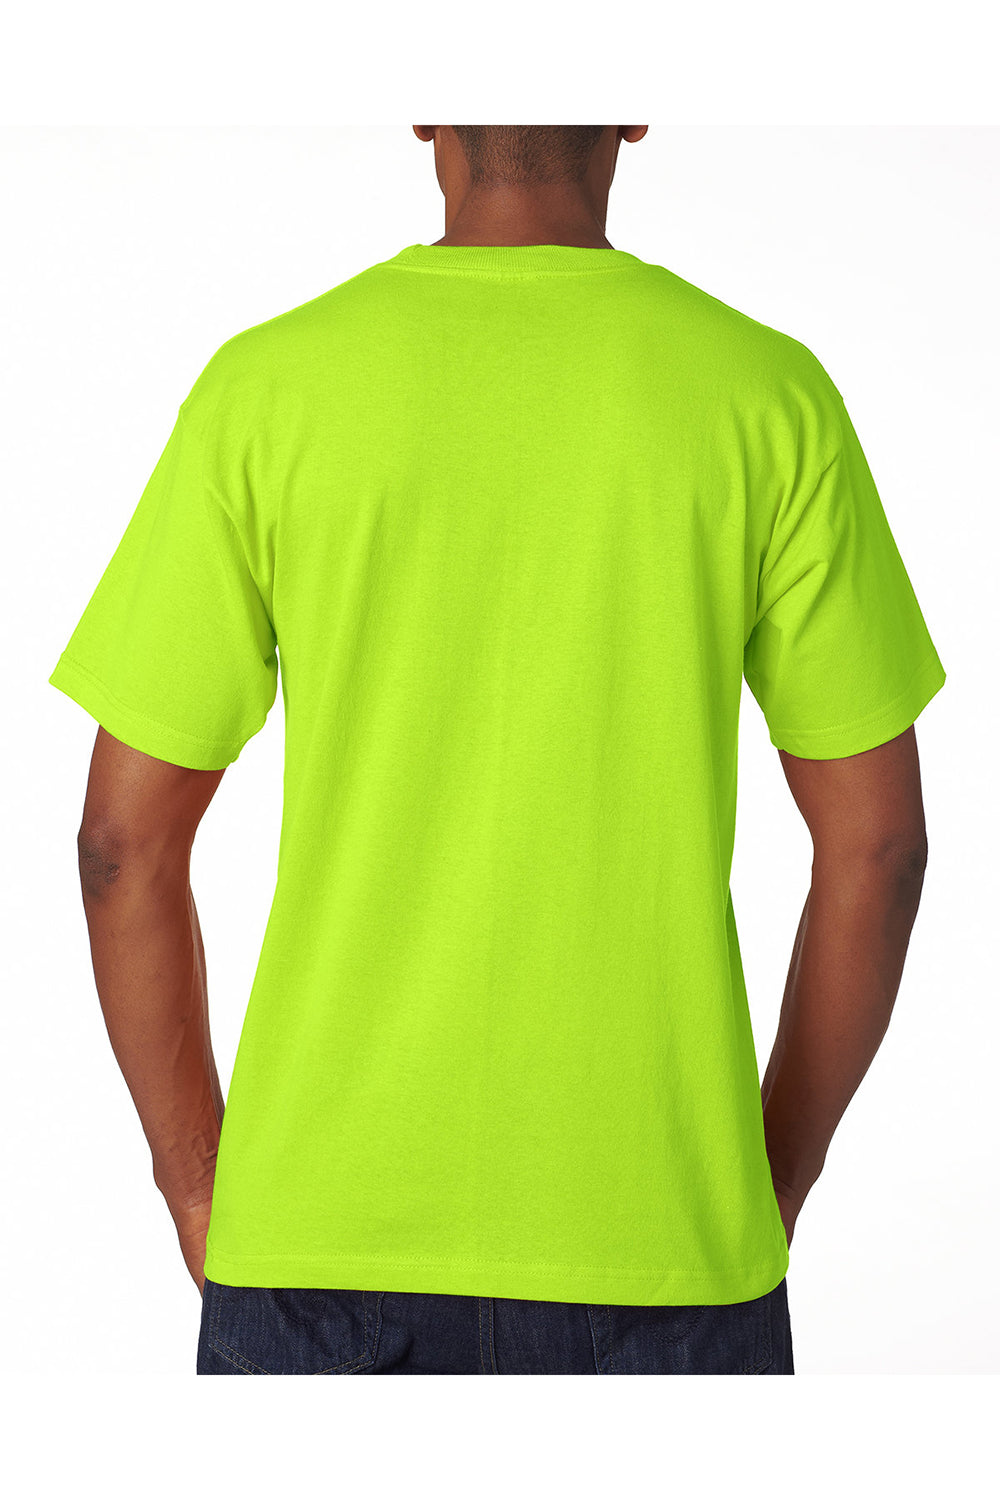 Bayside BA5100 Mens USA Made Short Sleeve Crewneck T-Shirt Lime Green Model Back